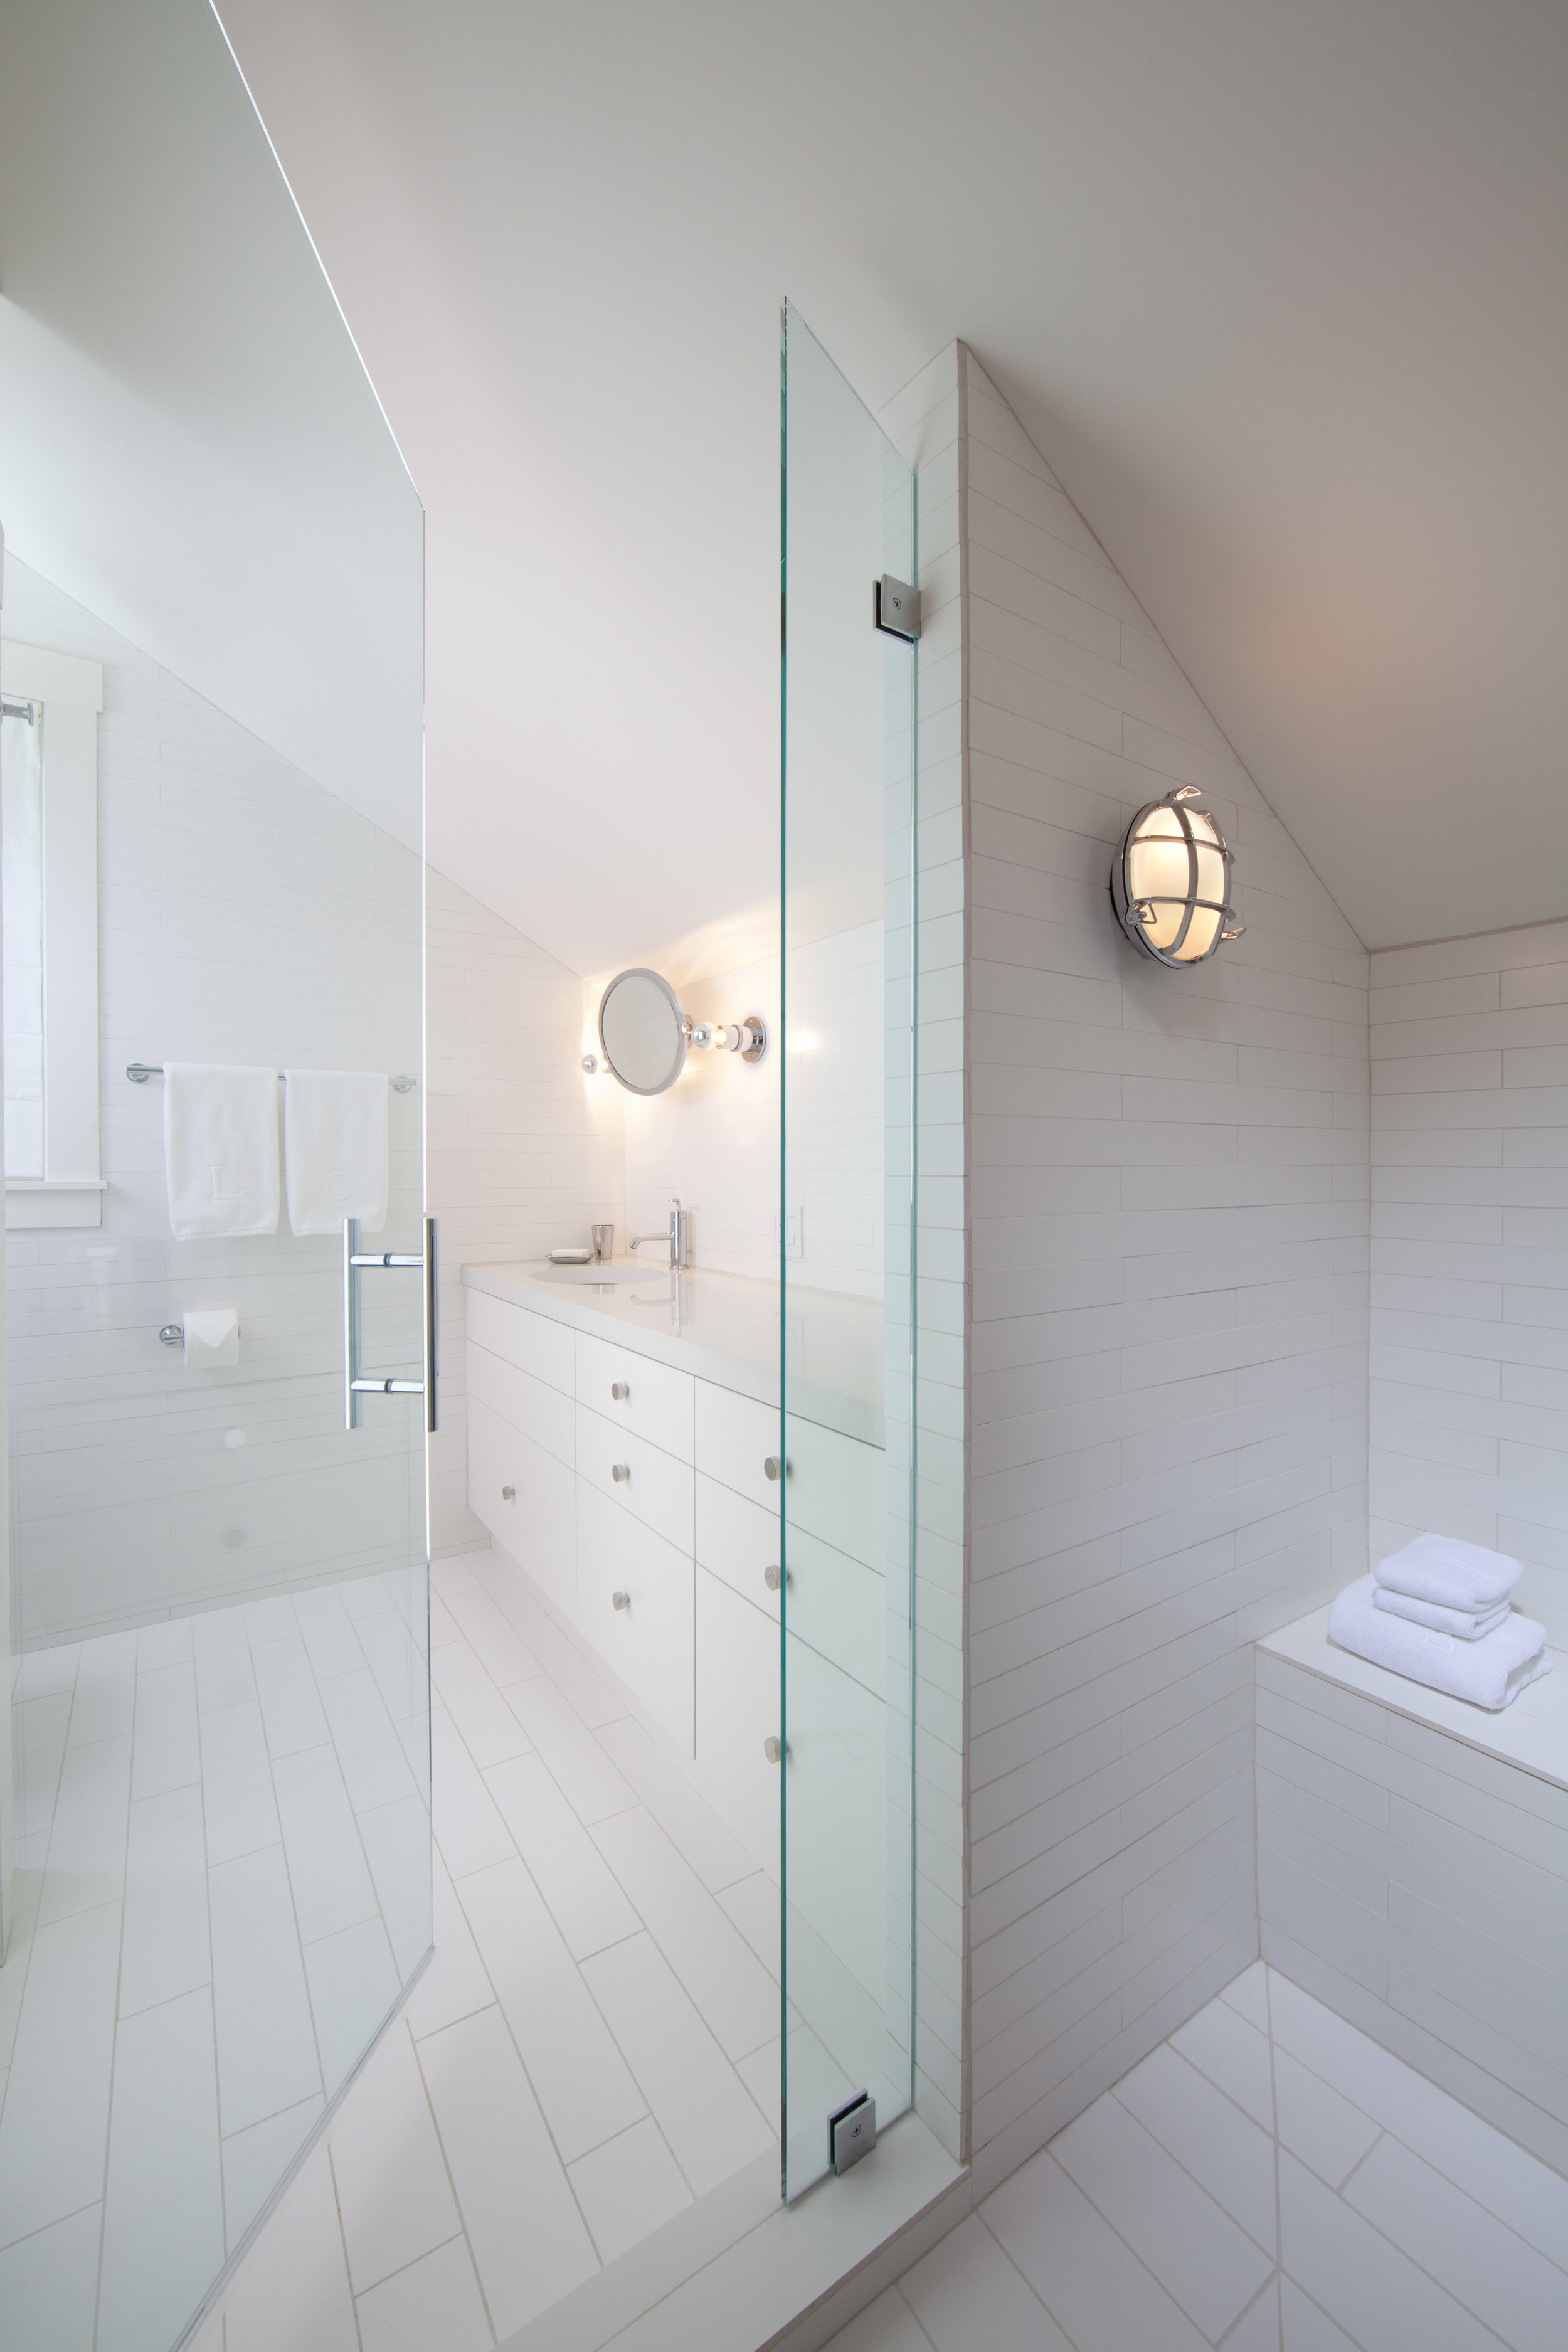  Ann Sacks tile white bathroom with nautical lights.  